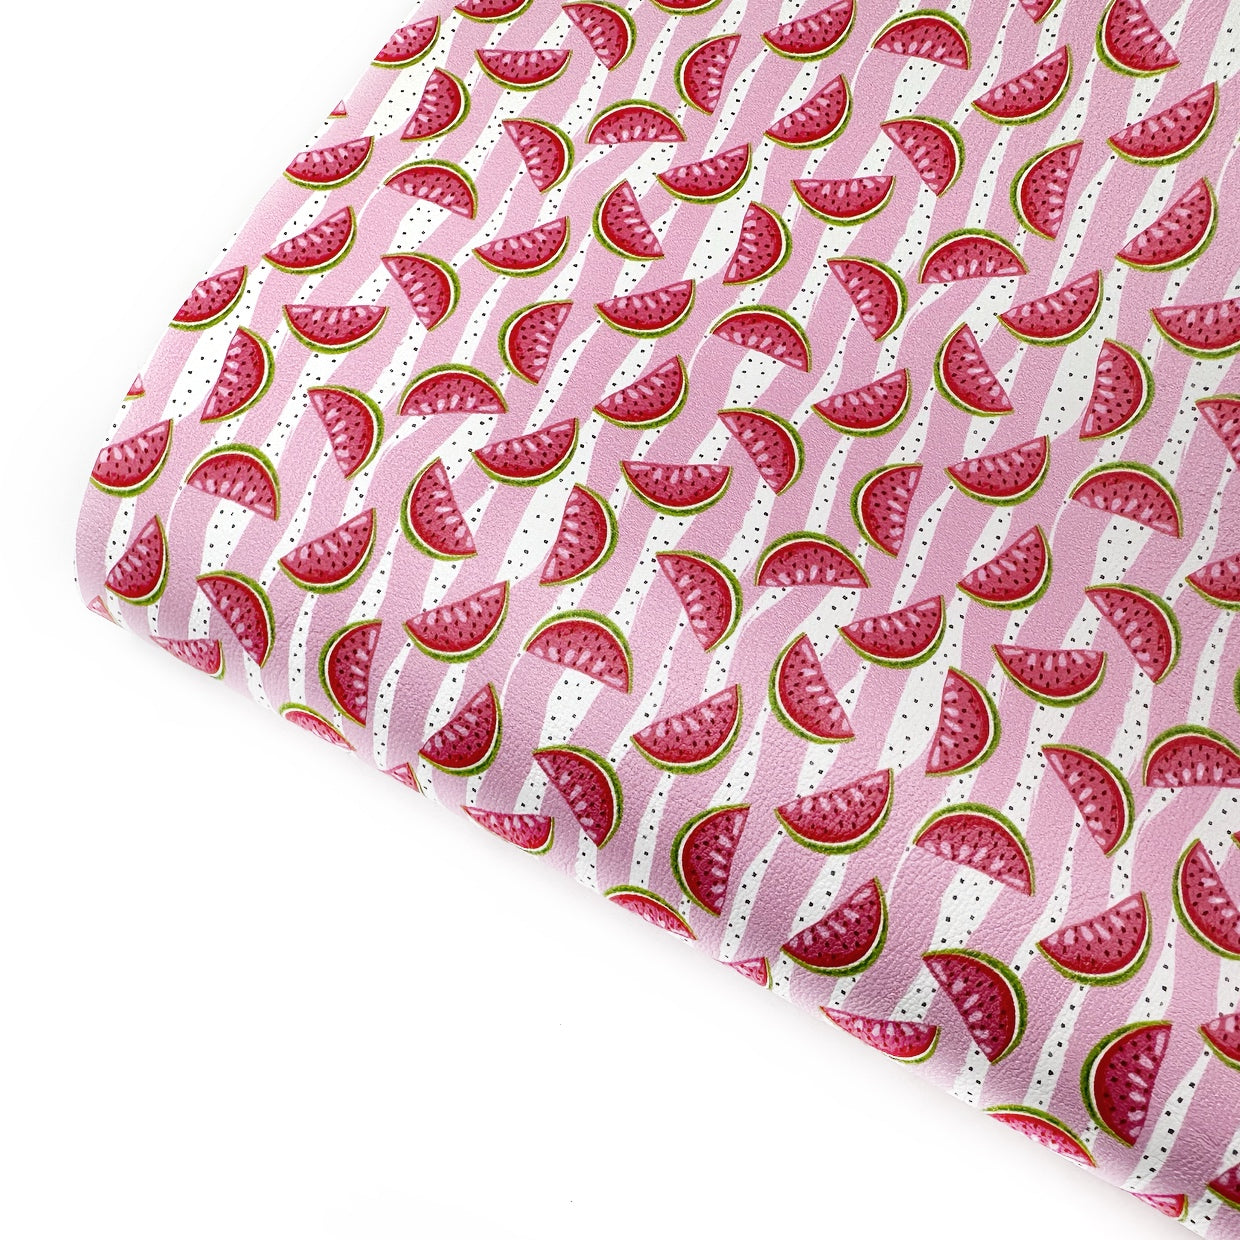 Watermelon Slice Premium Faux Leather Fabric Sheets